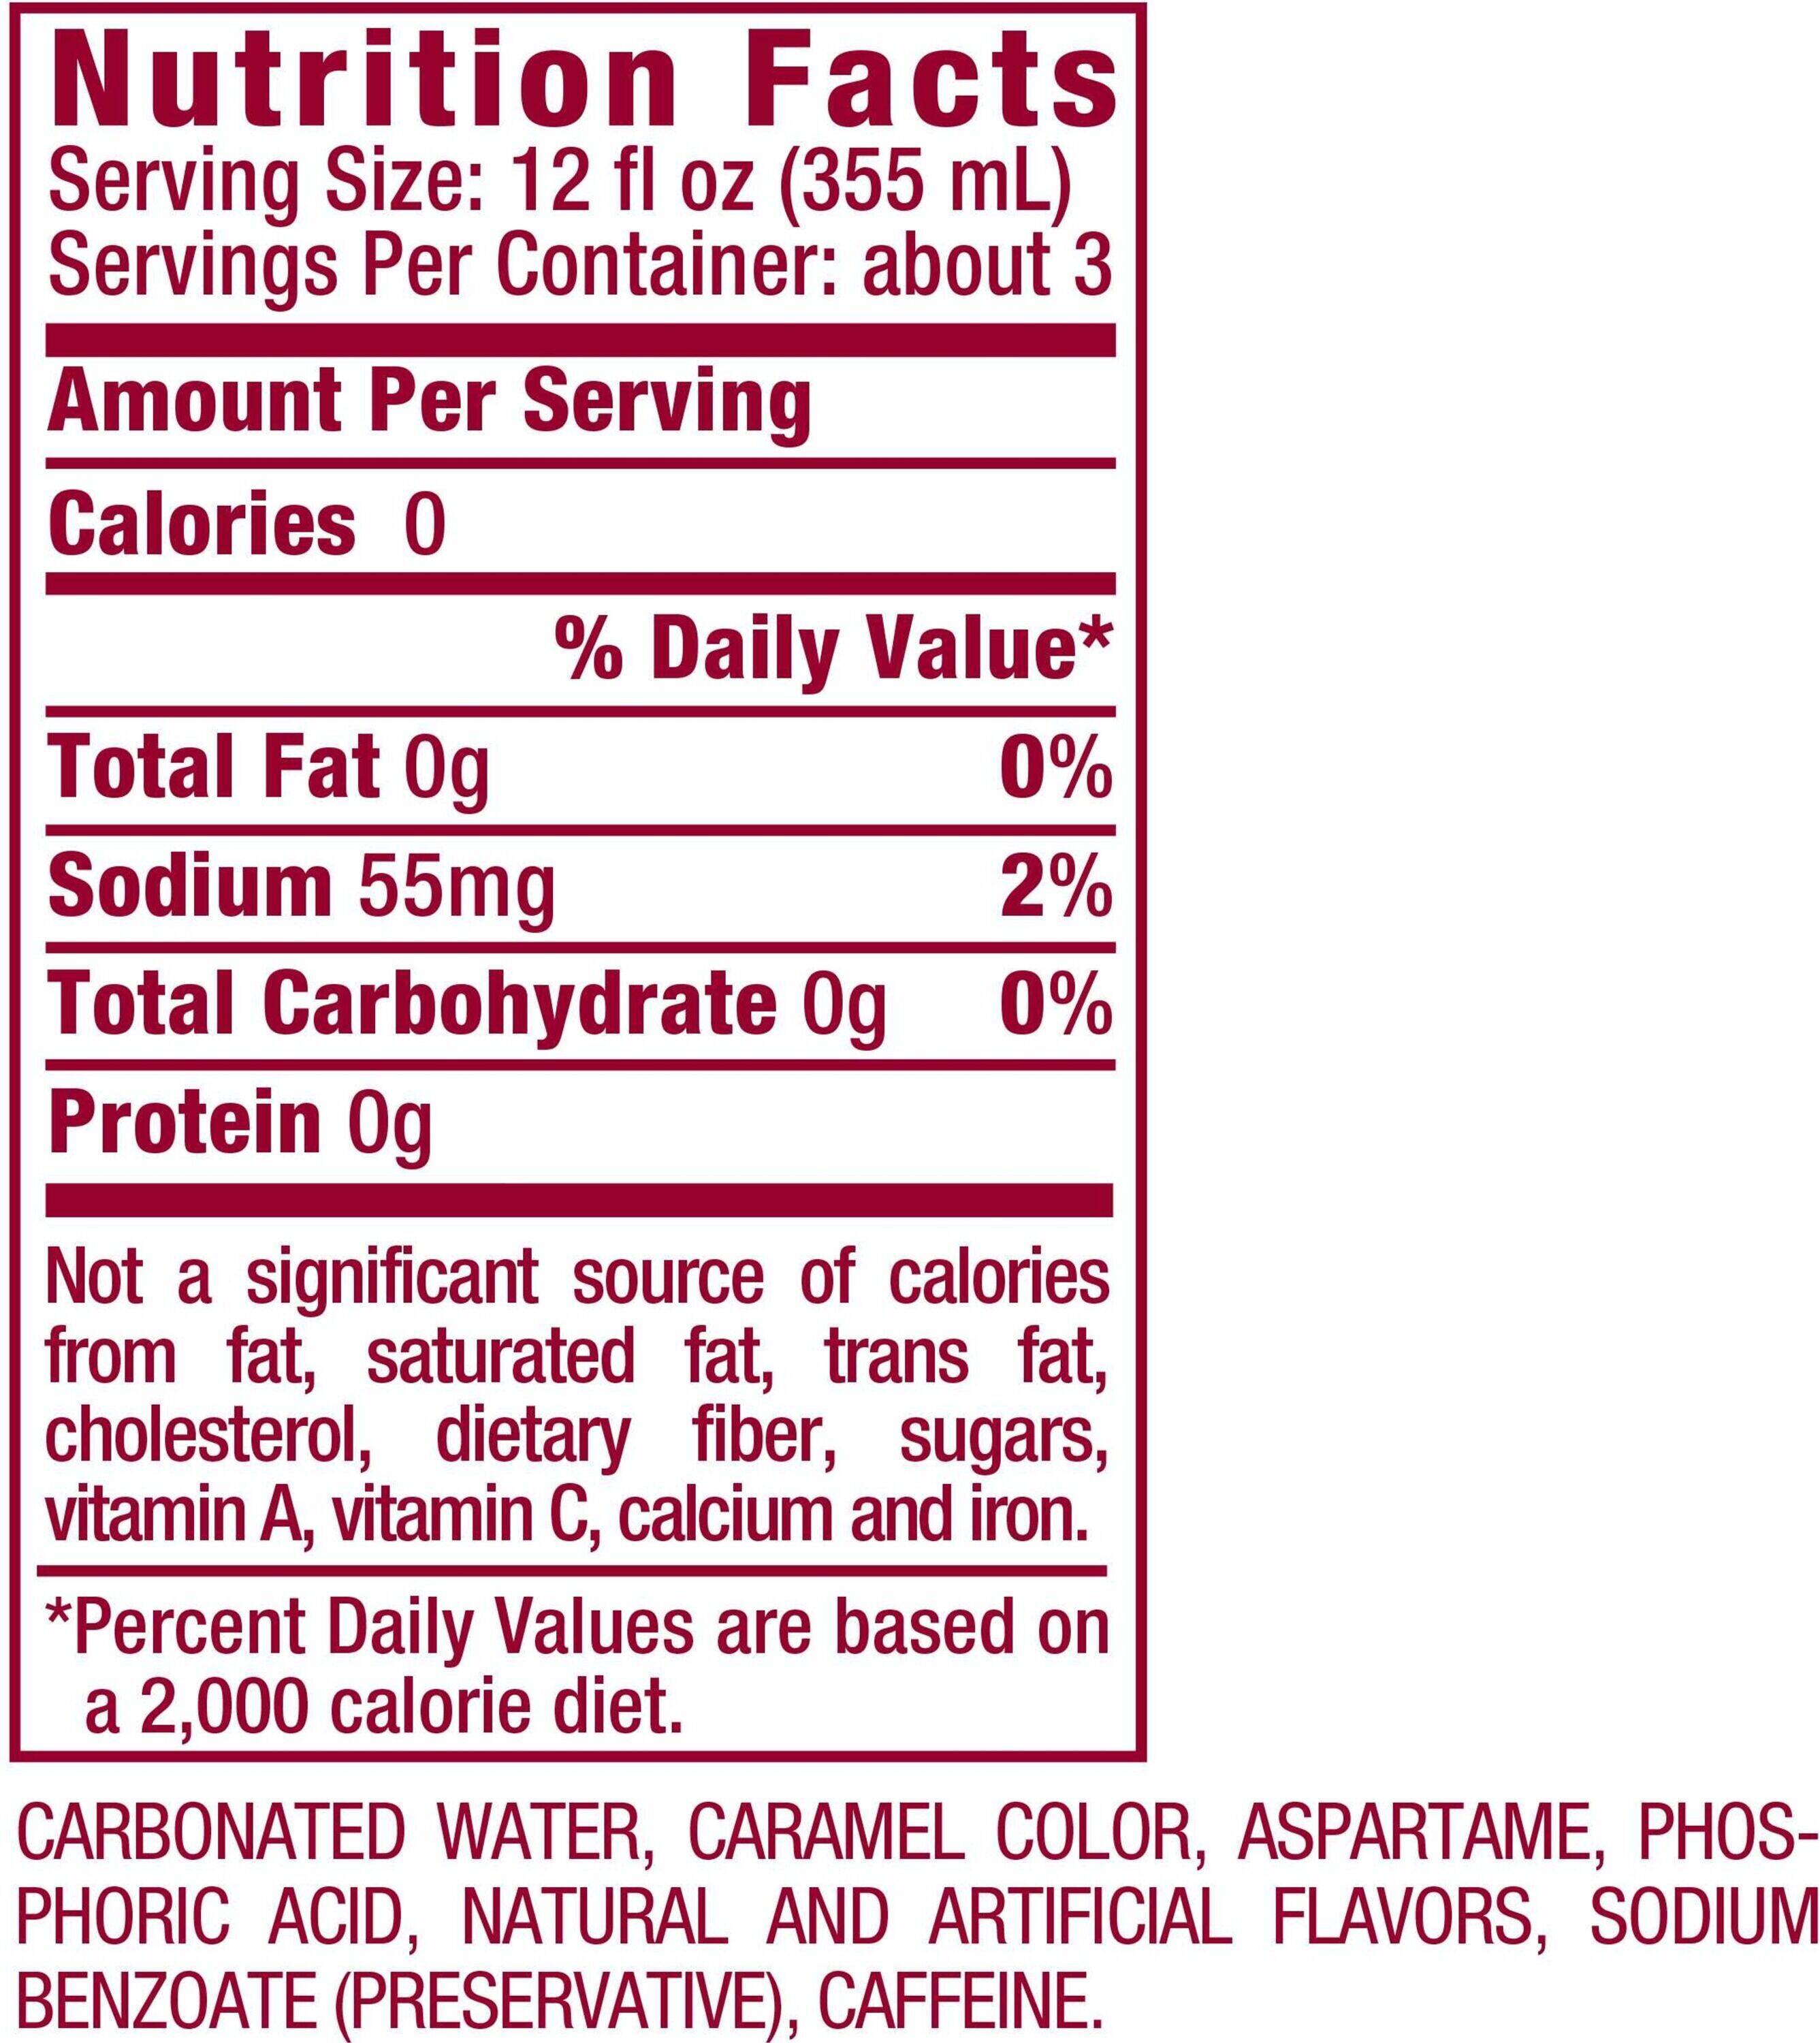 Image describing nutrition information for product Diet Dr Pepper